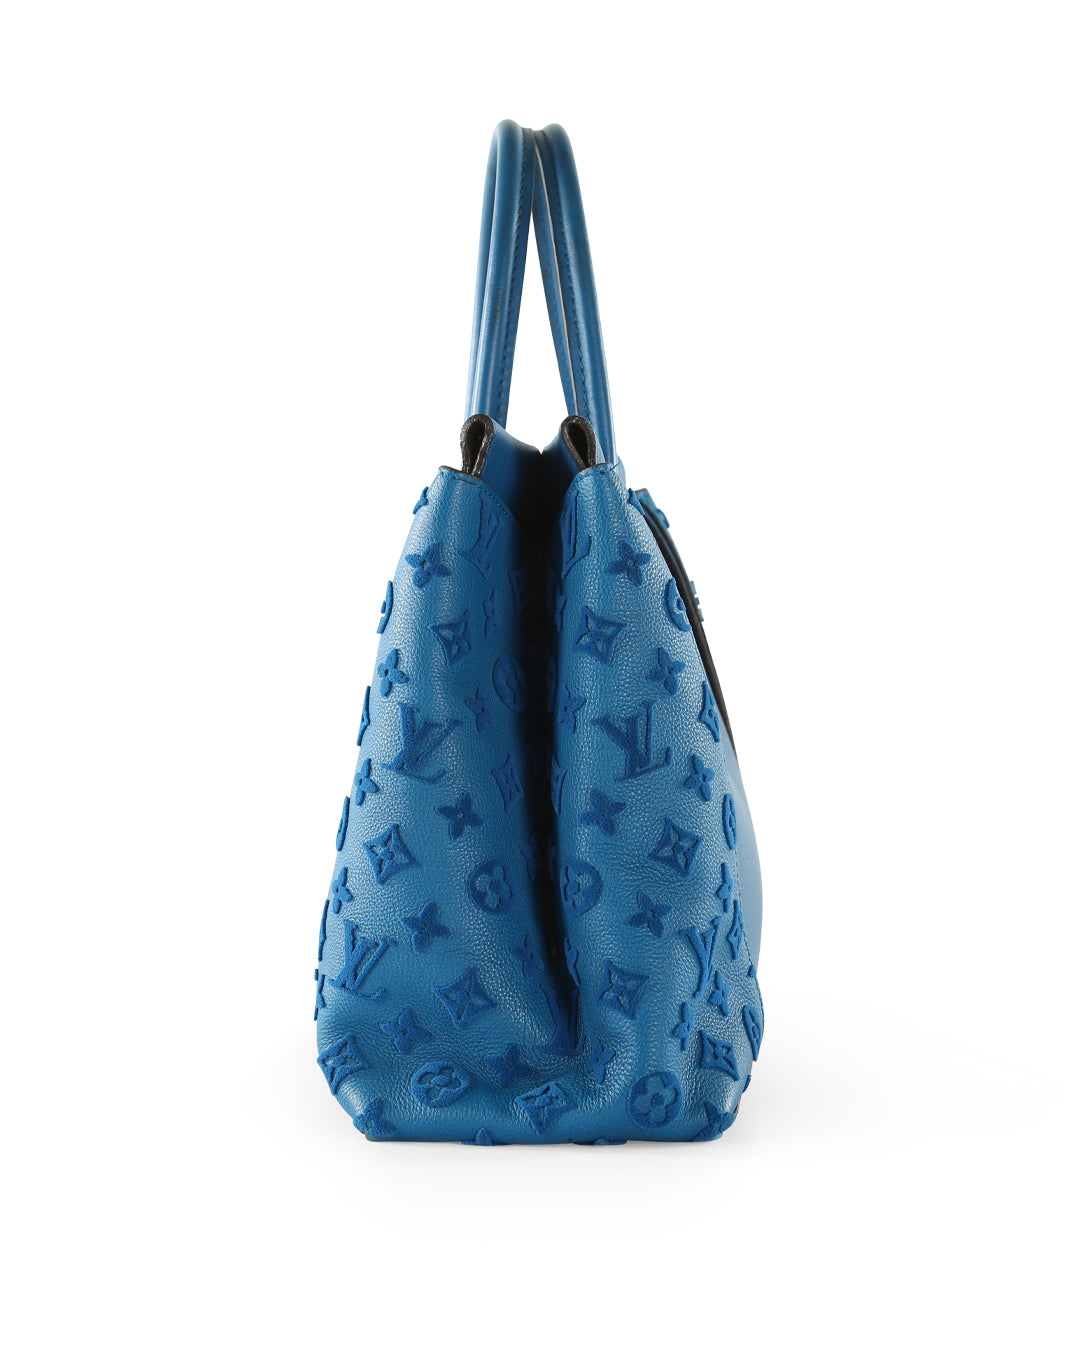 LOUIS VUITTON Louis vuitton blue leather W GM bag Price: $1460 RWB